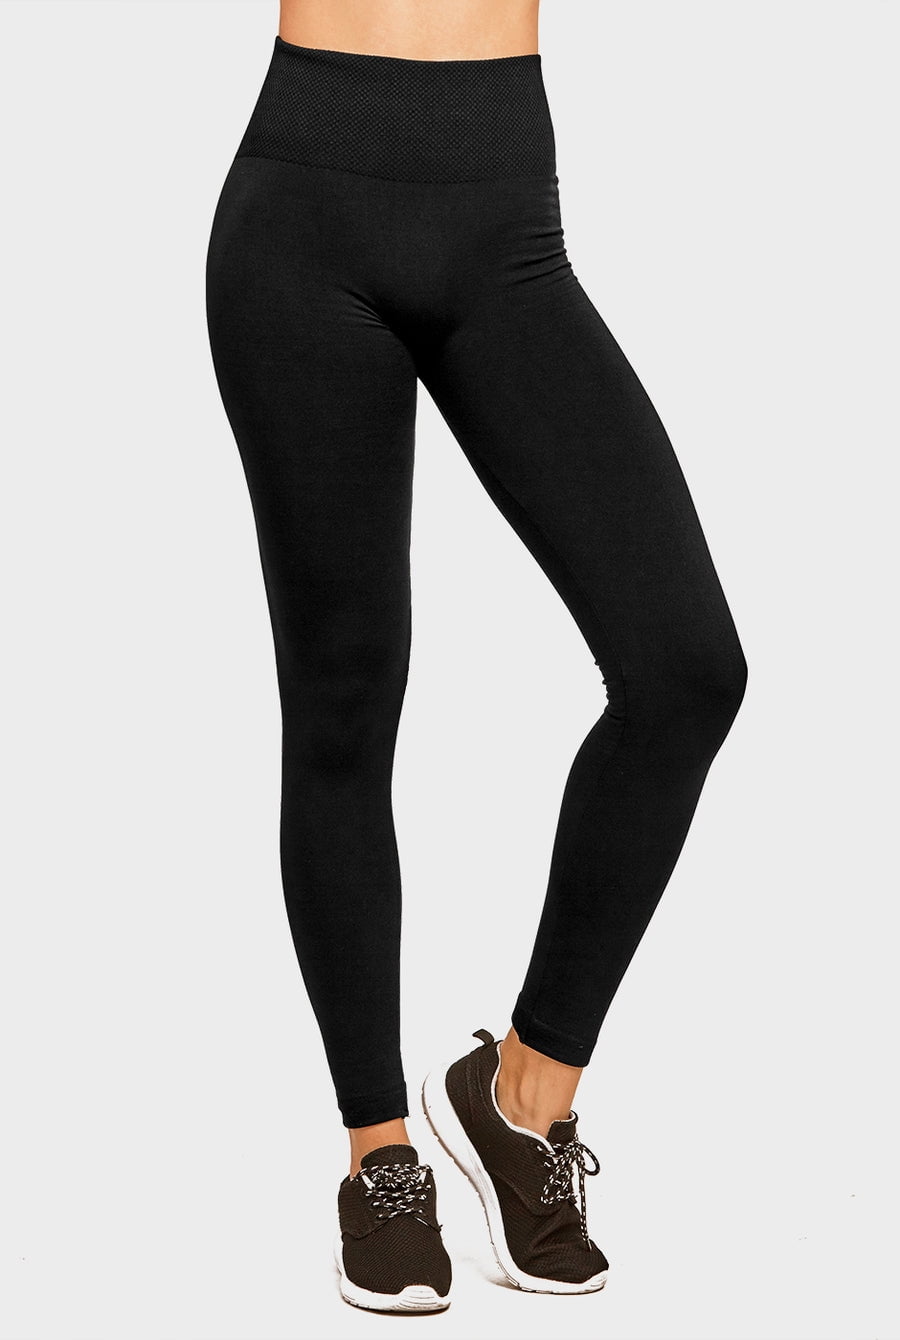 Uni Hosiery Co. Sofra Ladies Fleece Lined Leggings - Black